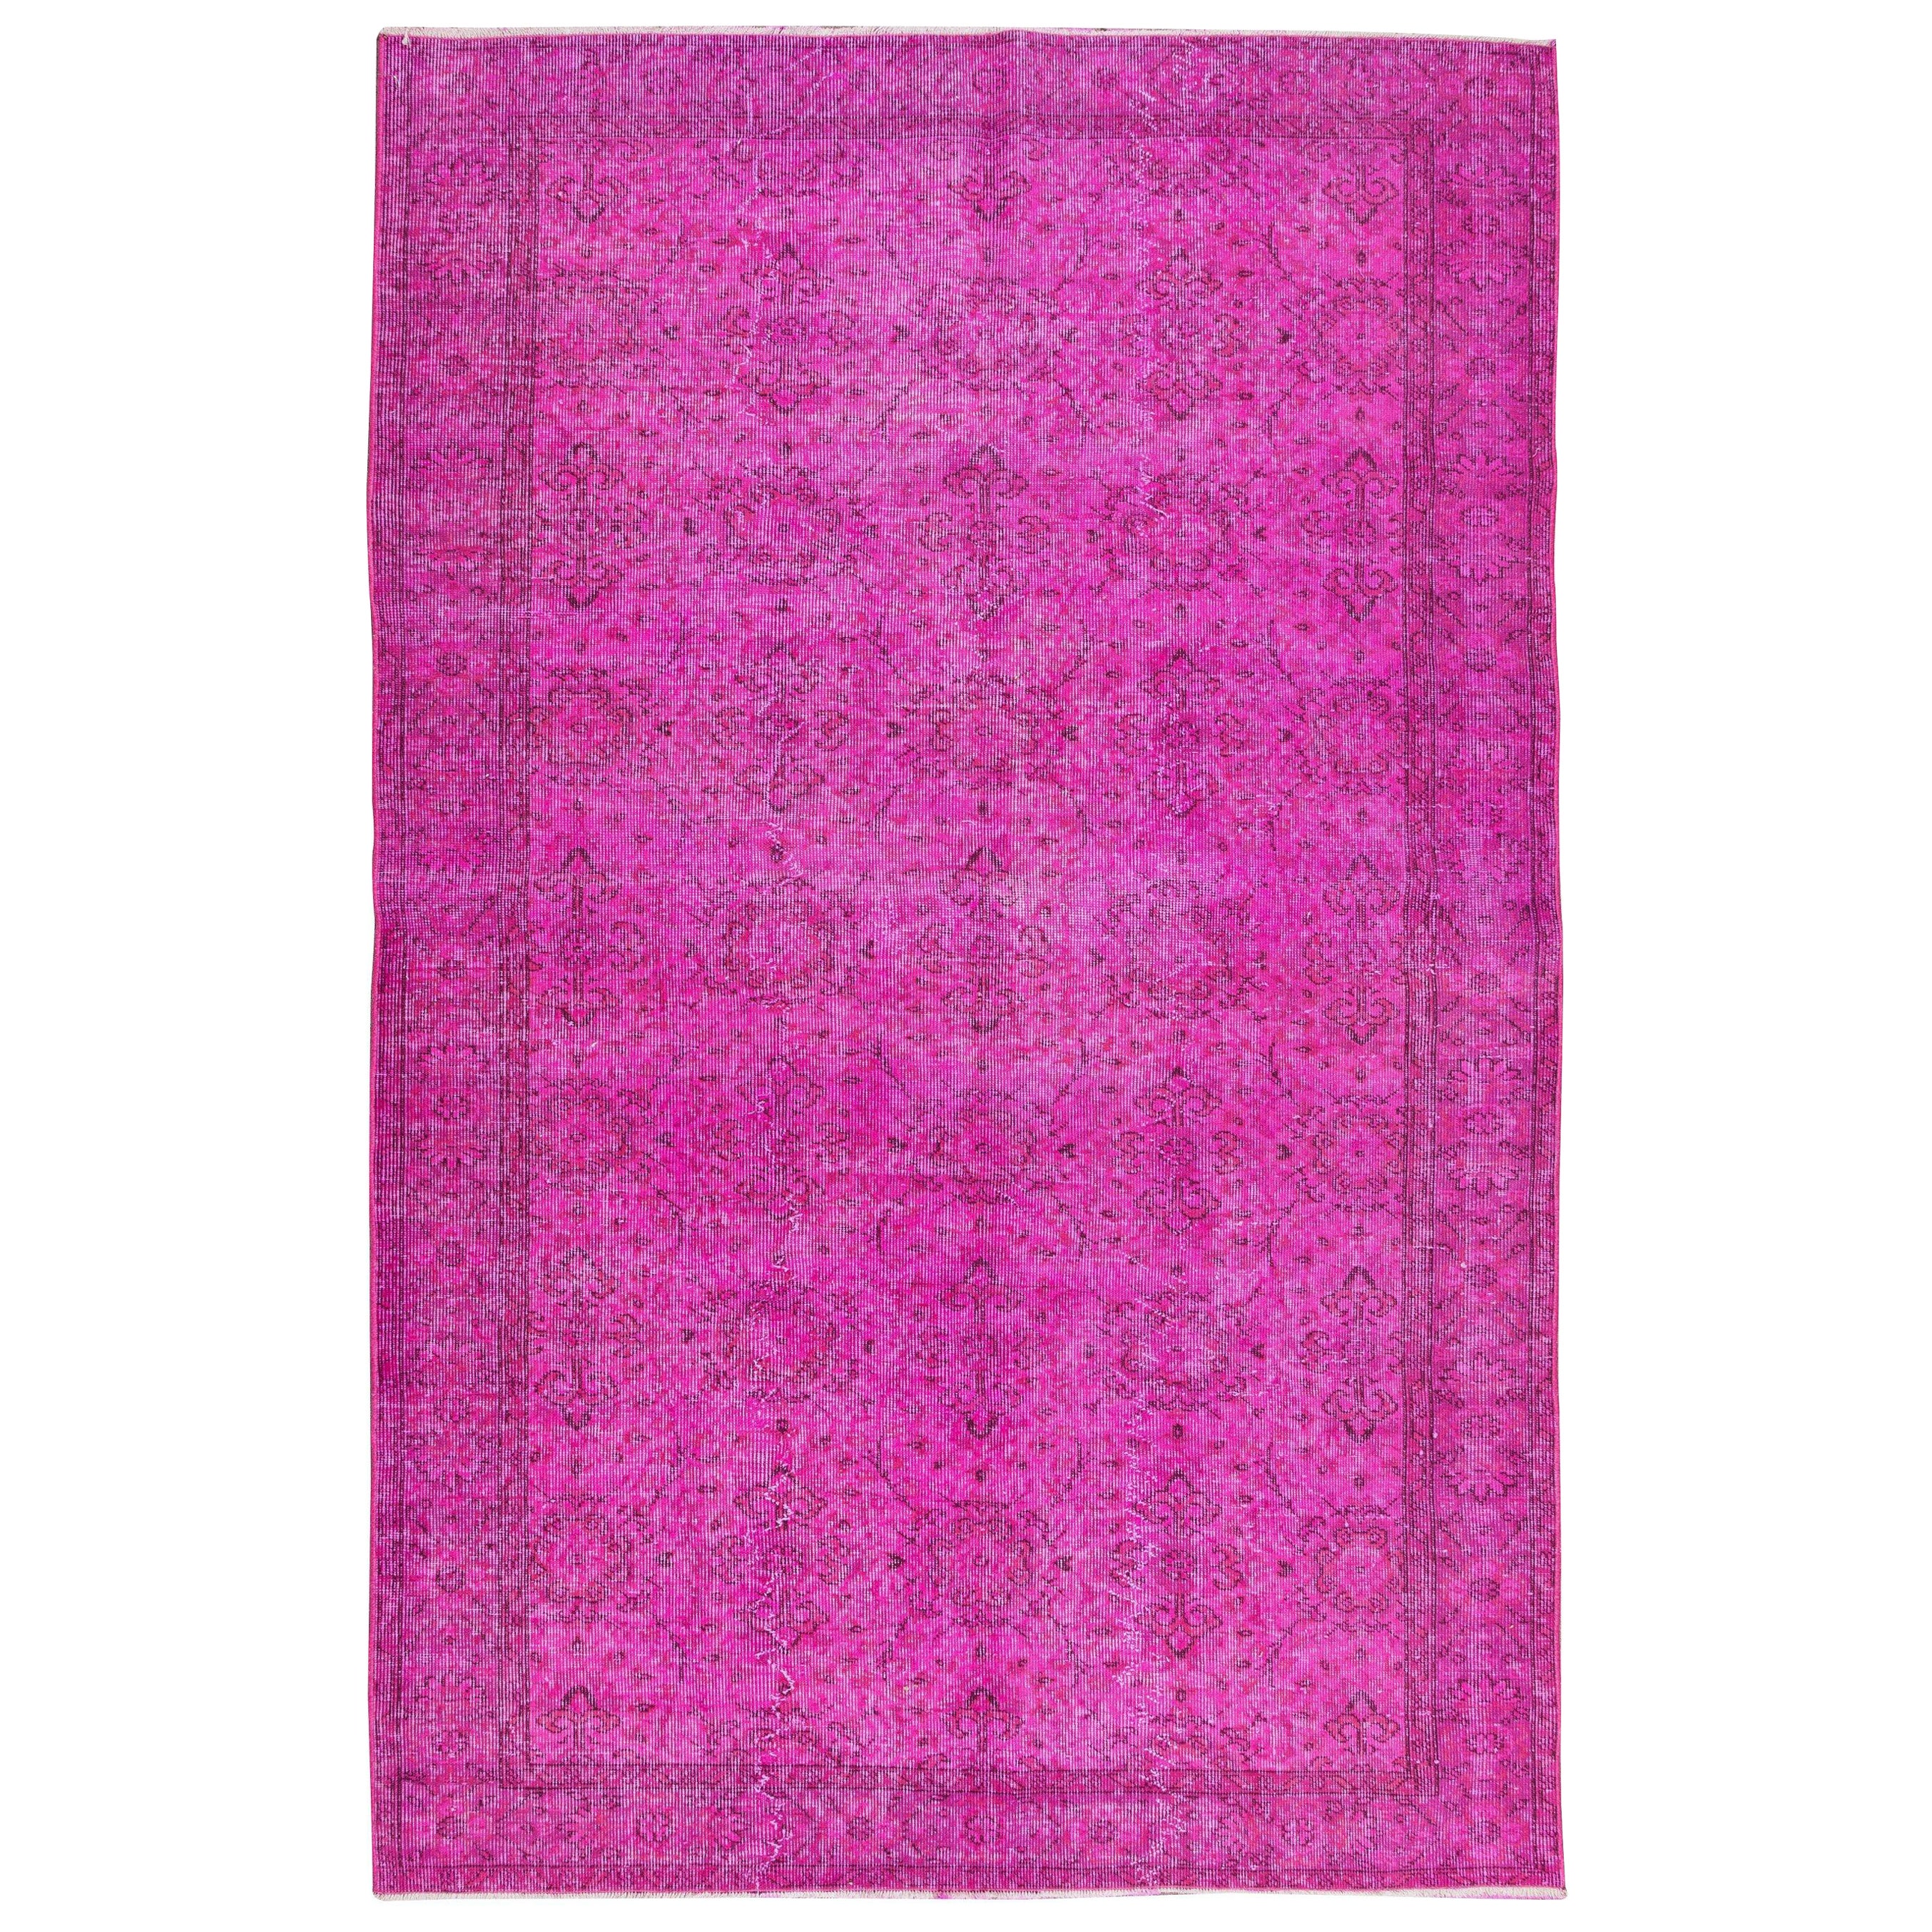 5.6x9 Ft Vintage Handmade Turkish Rug in Pink, Modern Floral Pattern Wool Carpet